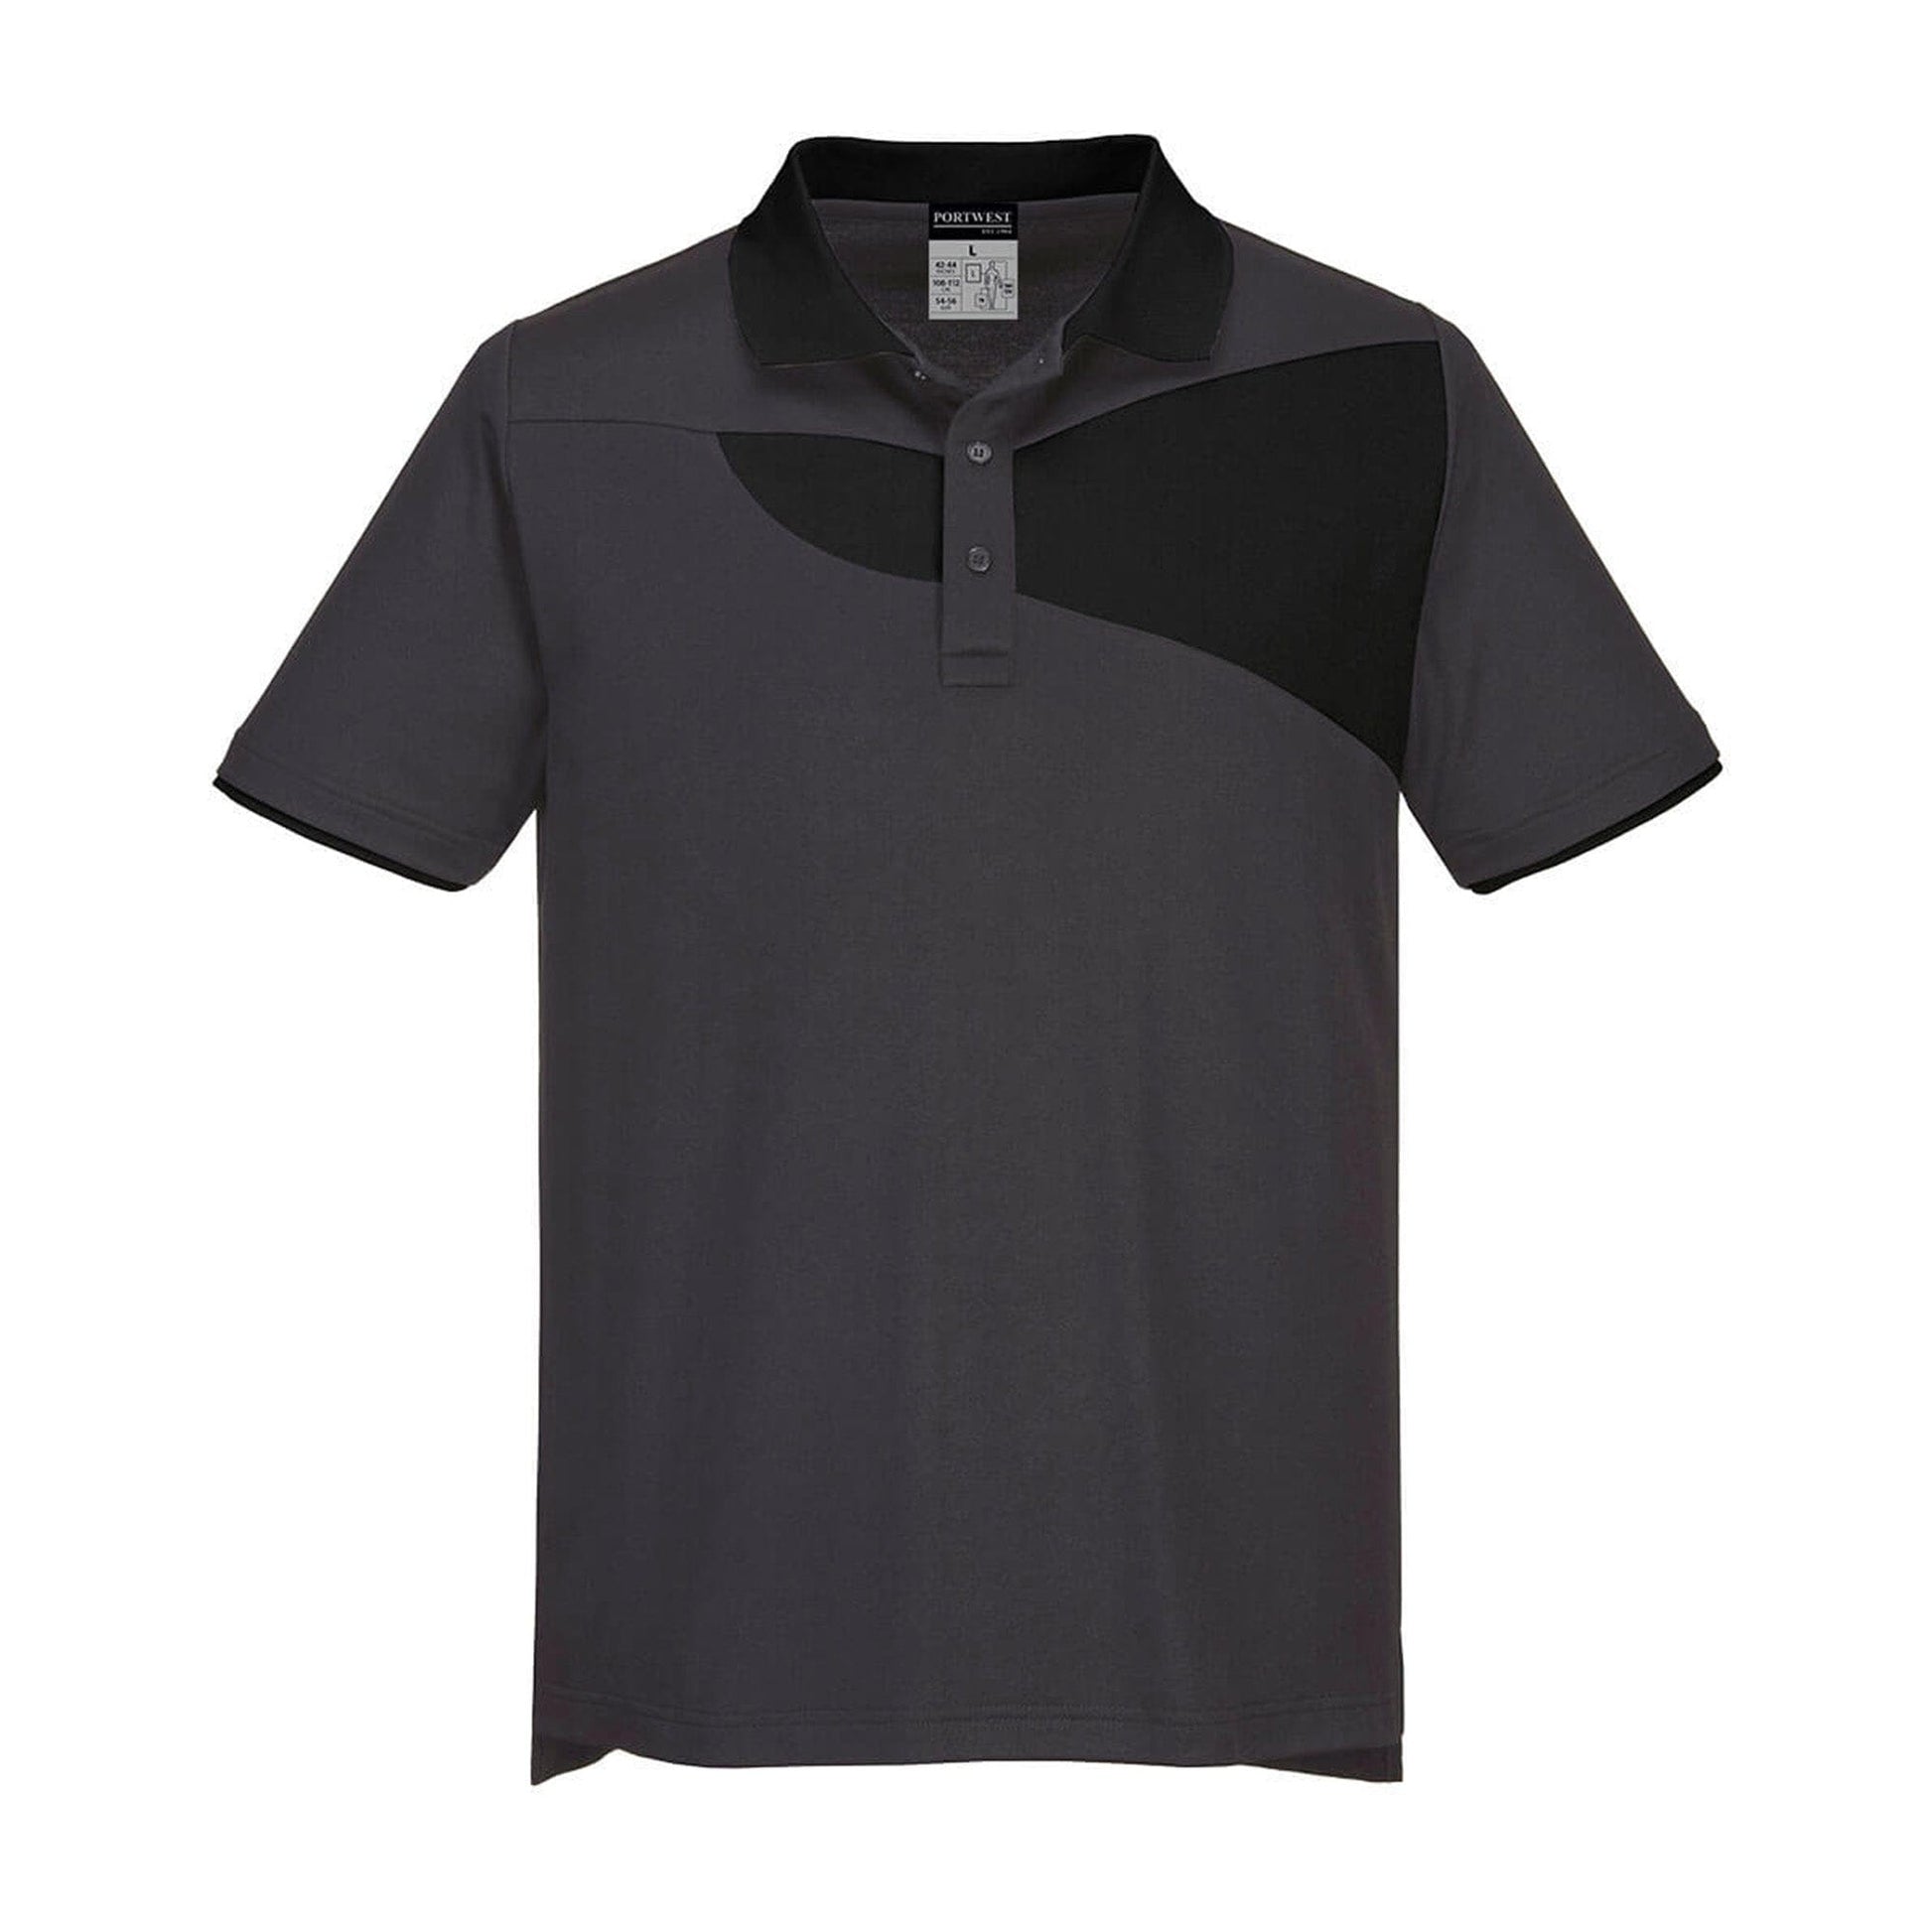 Portwest PW2 Cotton Comfort Polo Shirt PW210 Zoom Grey/Black